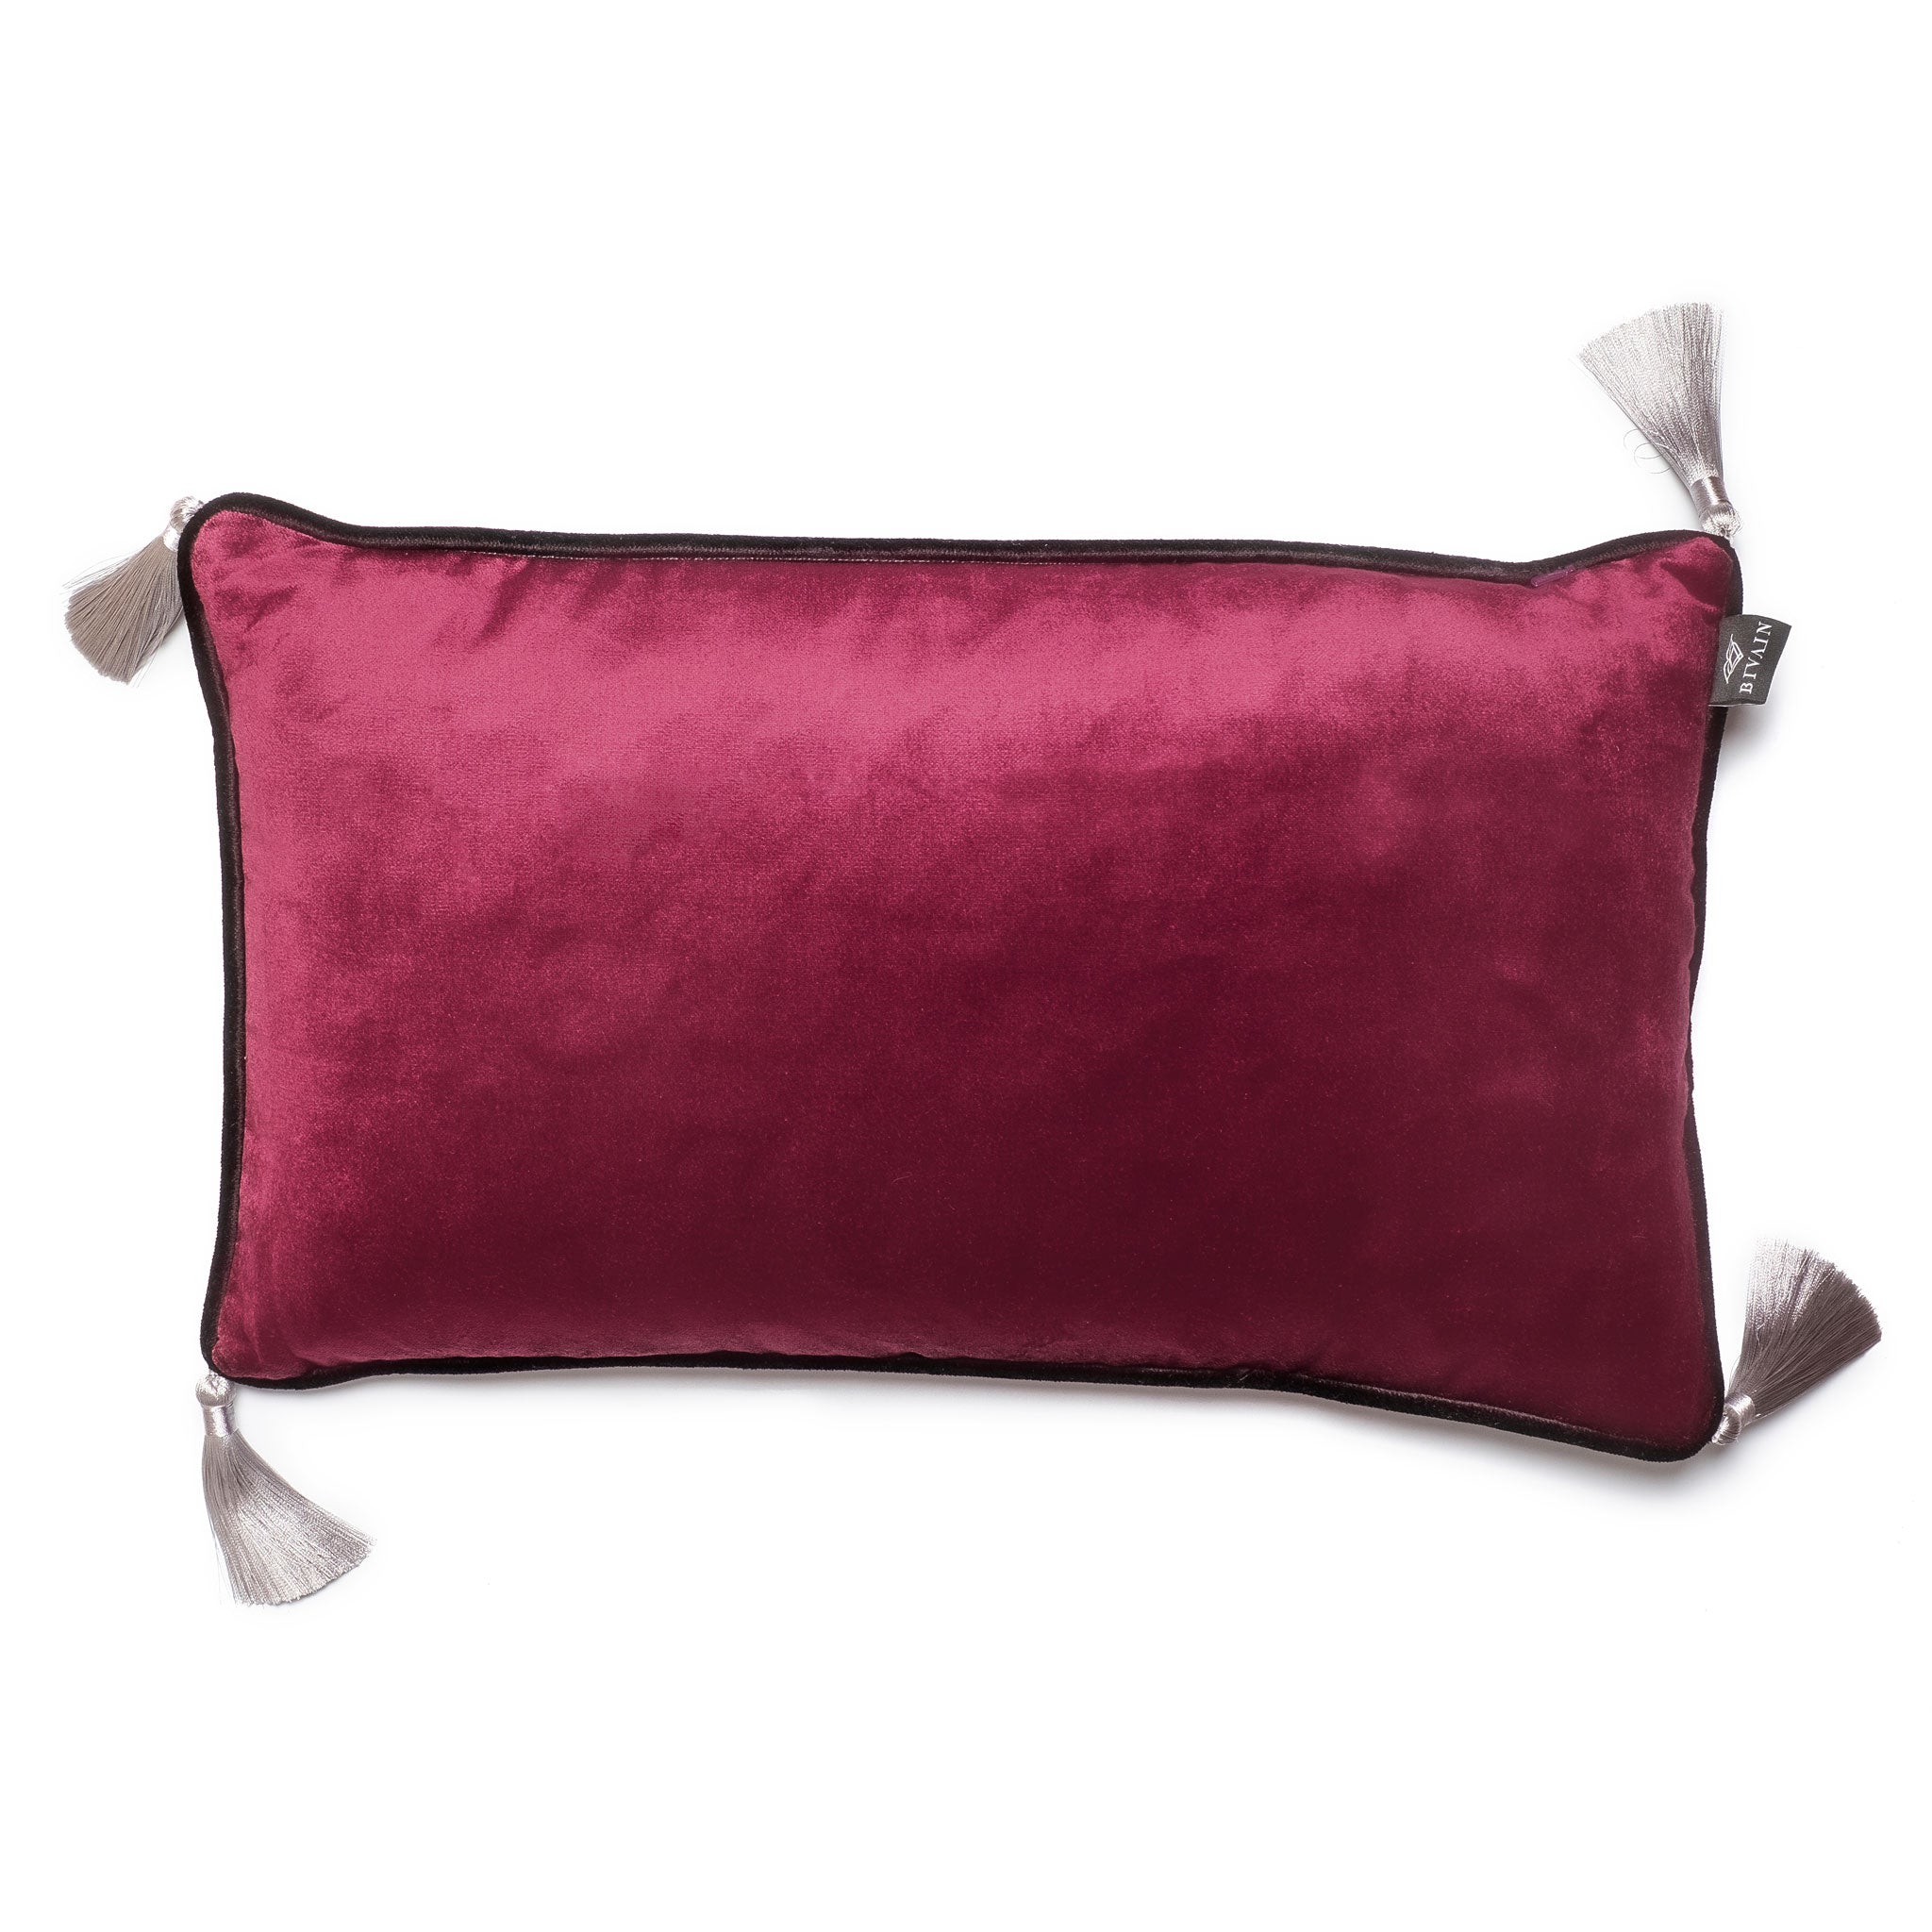 Dark Purple Velvet Rectangular Cushion with Tassels